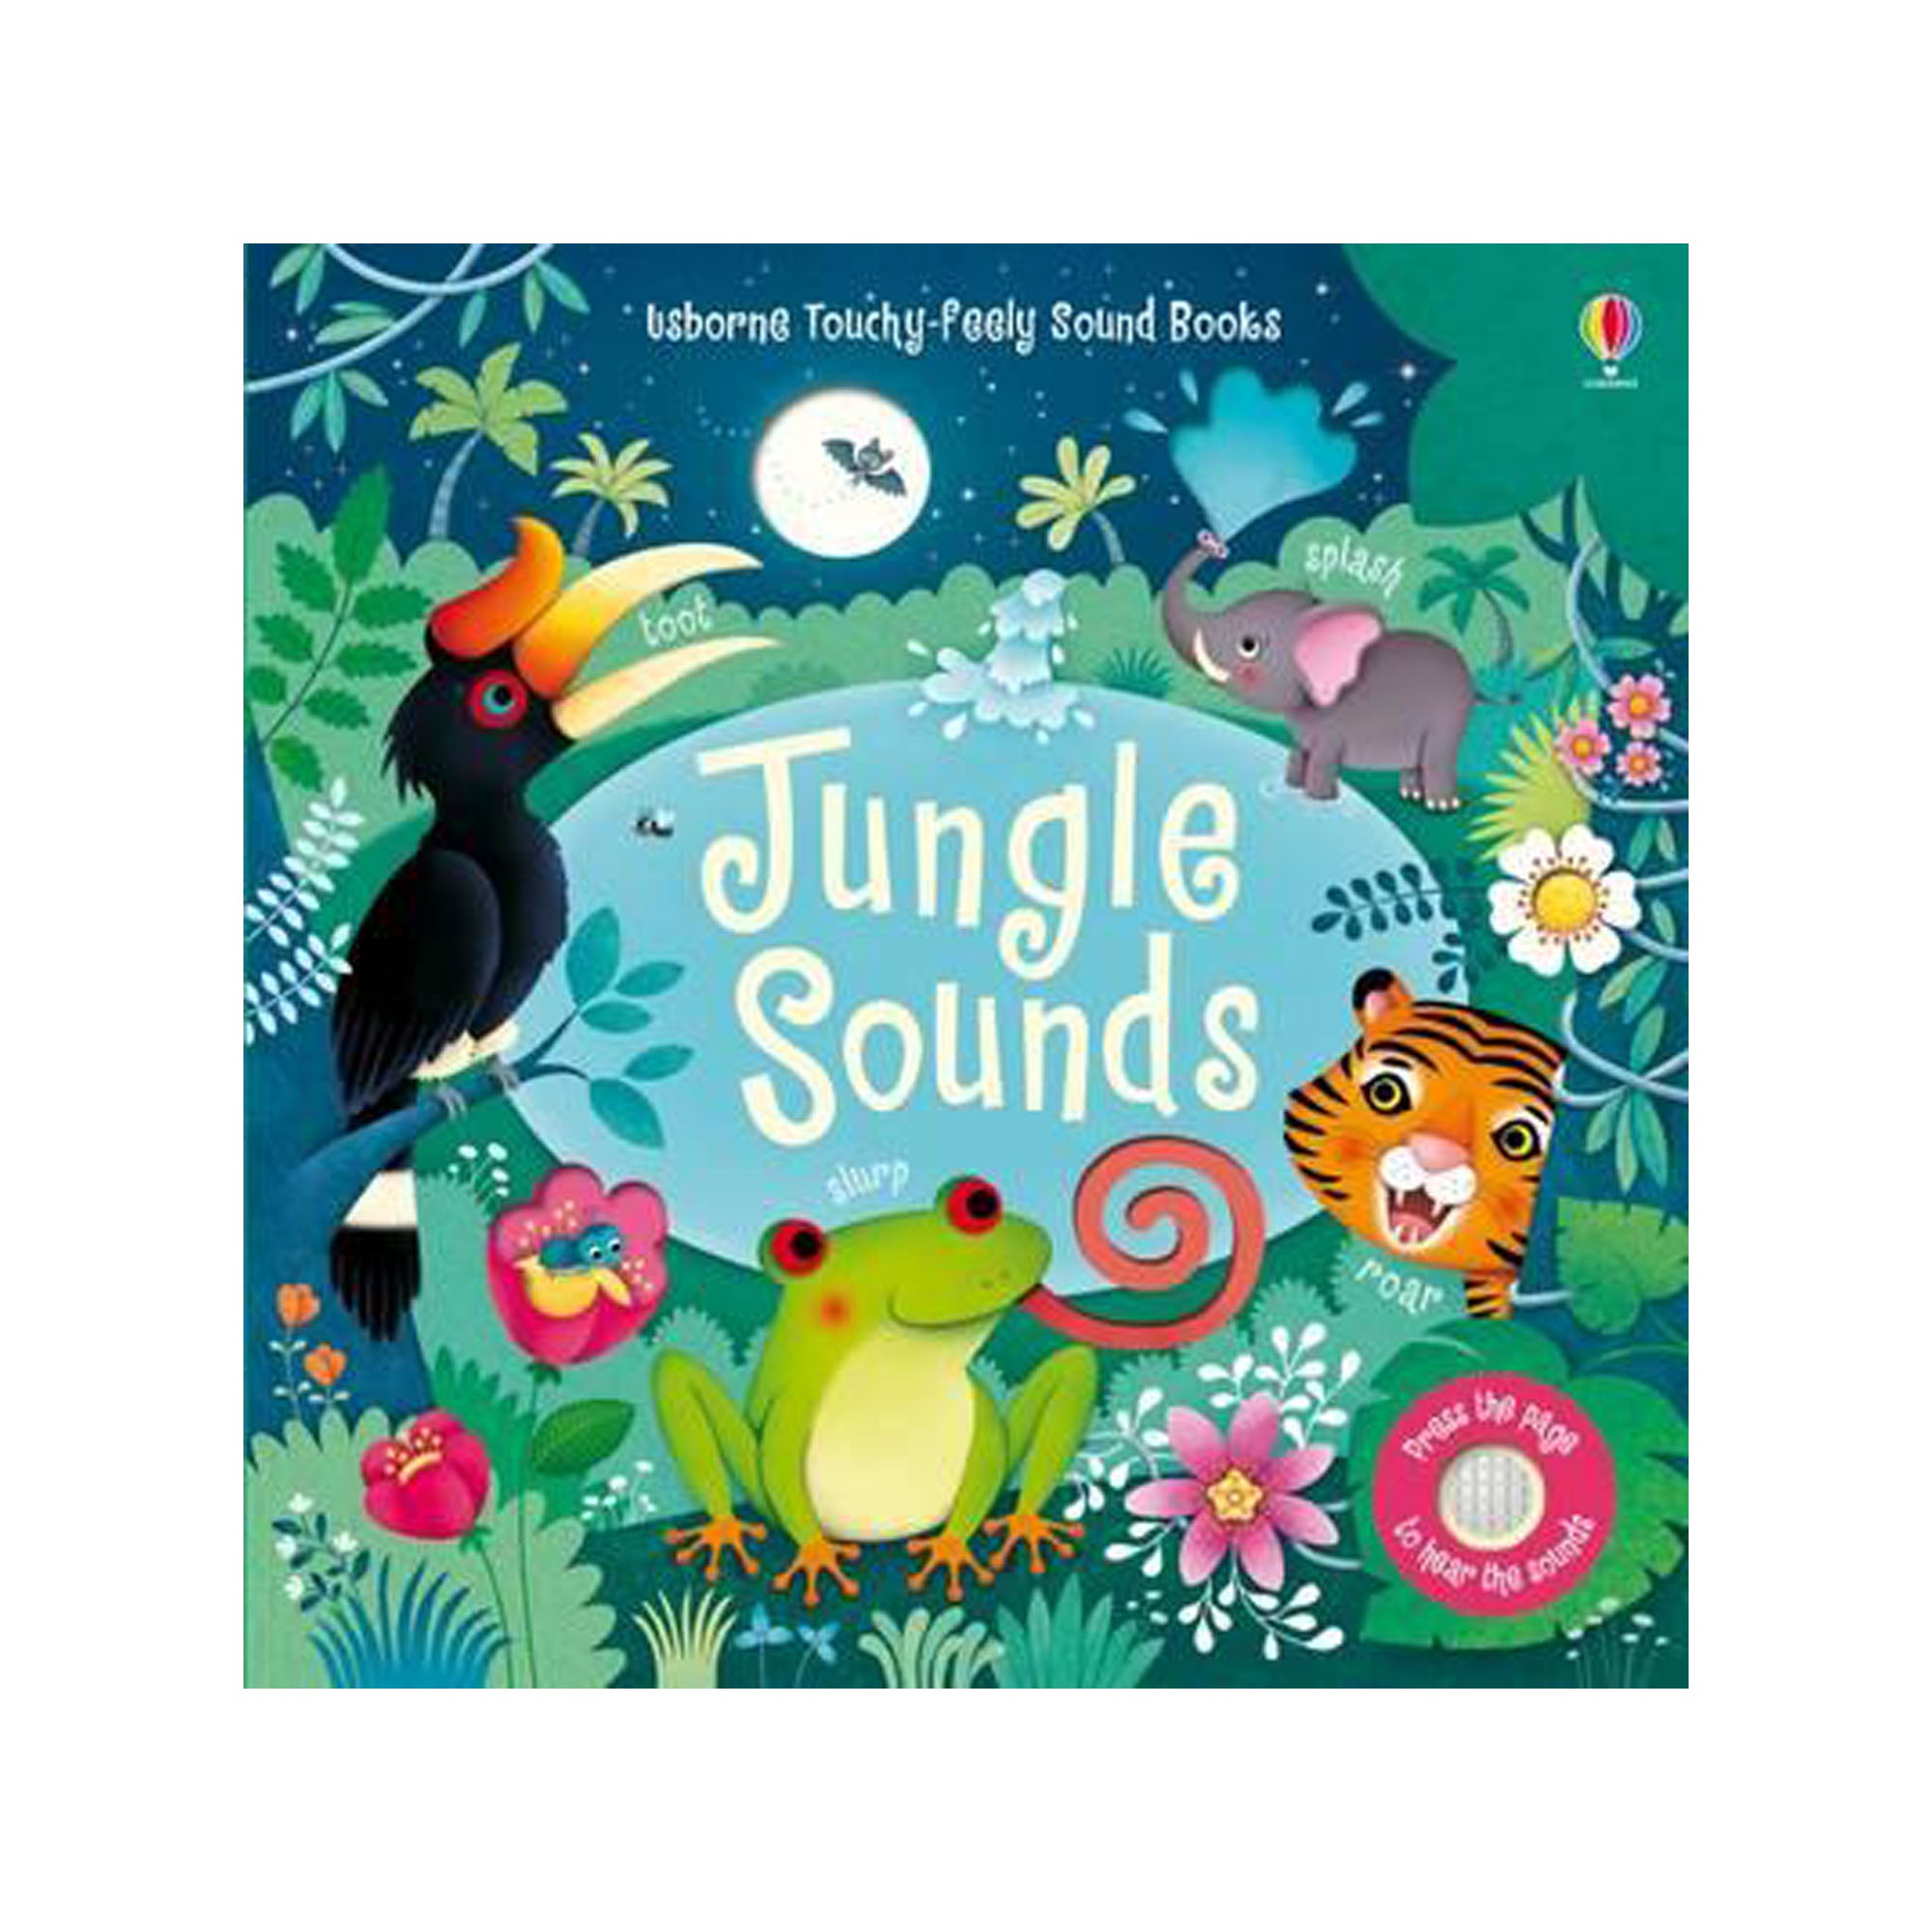 Jungle sounds book